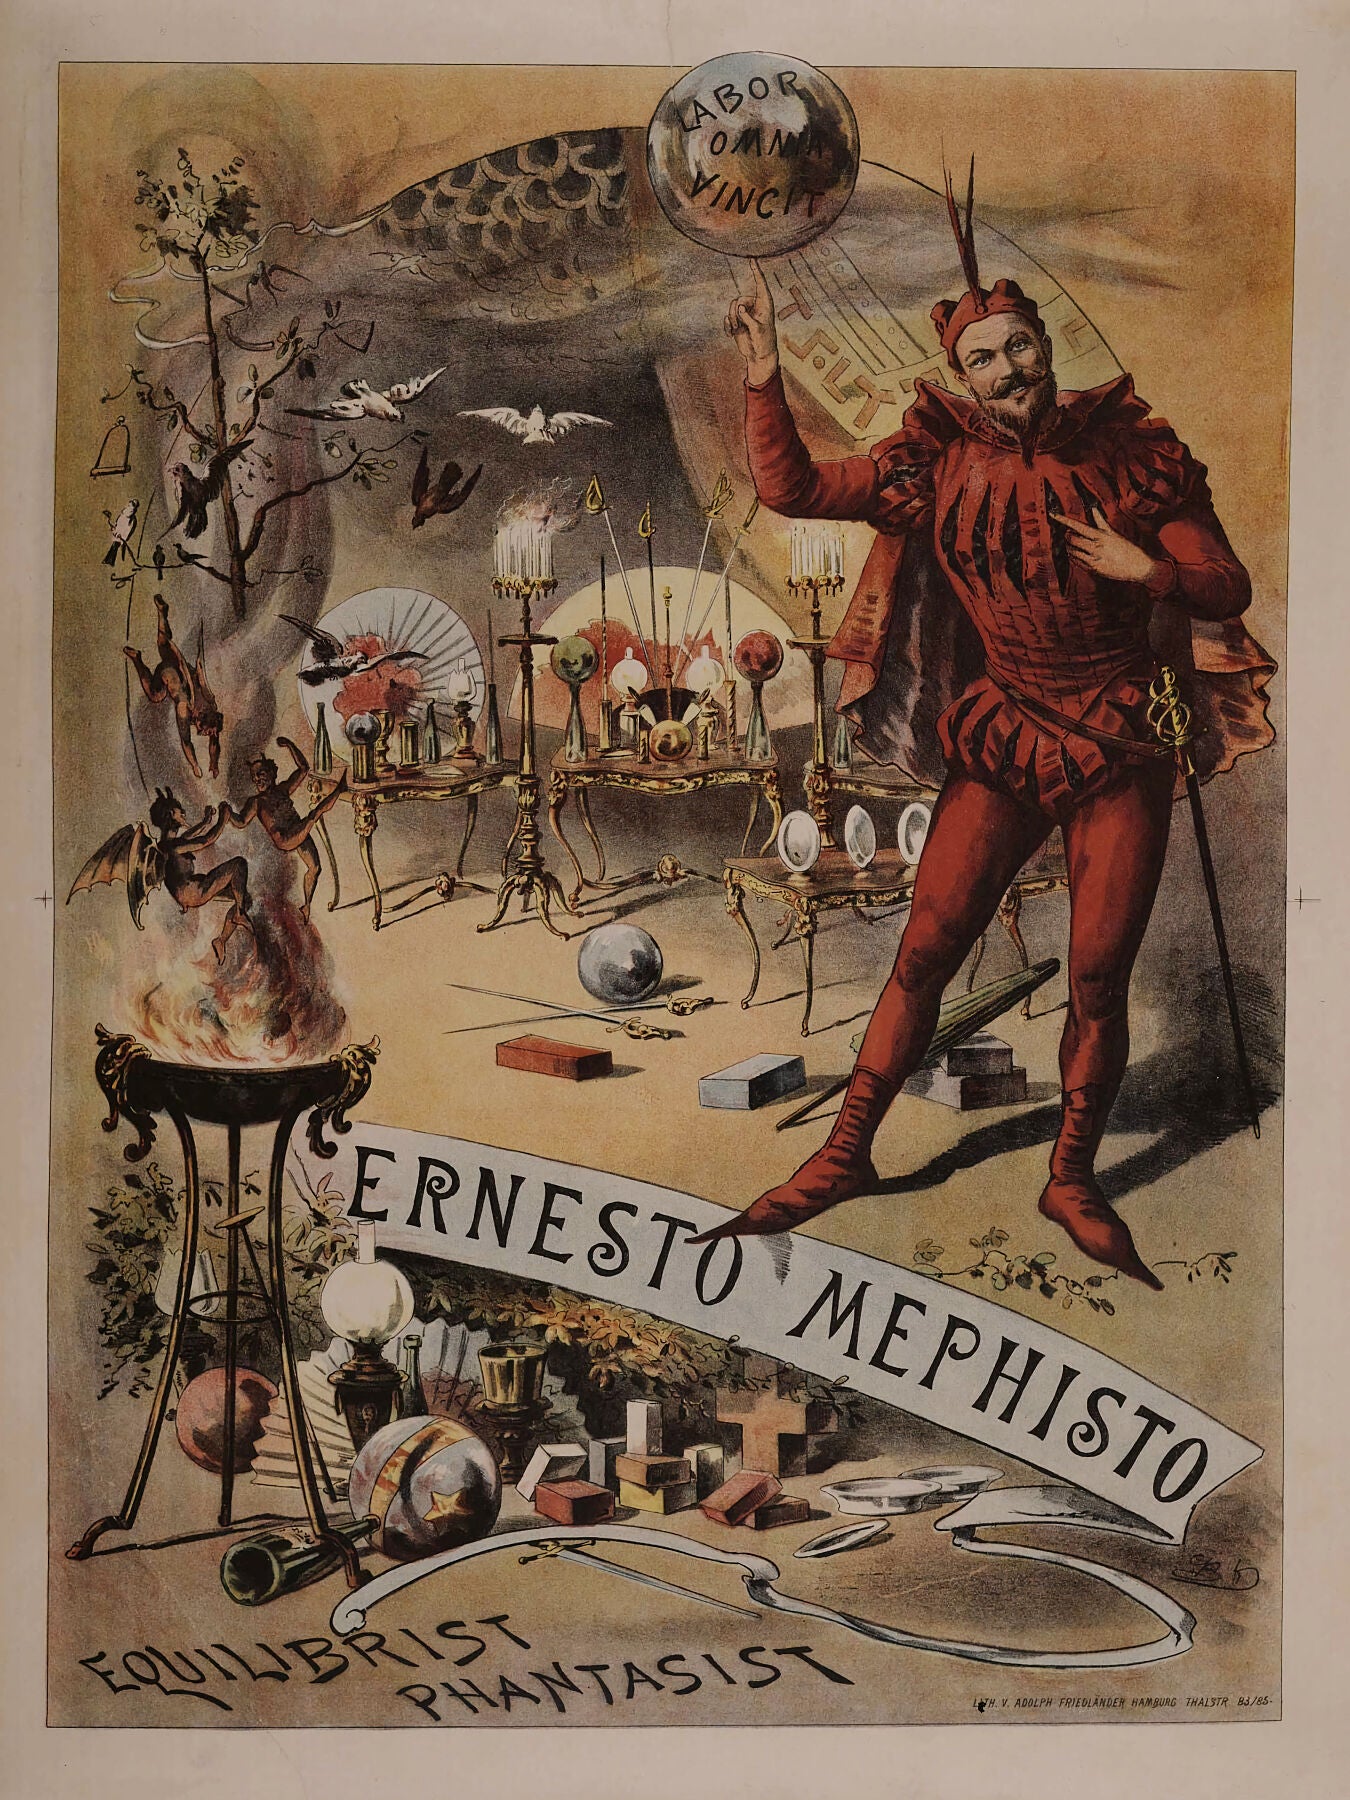 Ernesto Mephisto - equilibrist phantasist - B F_ Author Circo Price Lithographie V. - Adolph Friedländer (Hamburg), 1889.